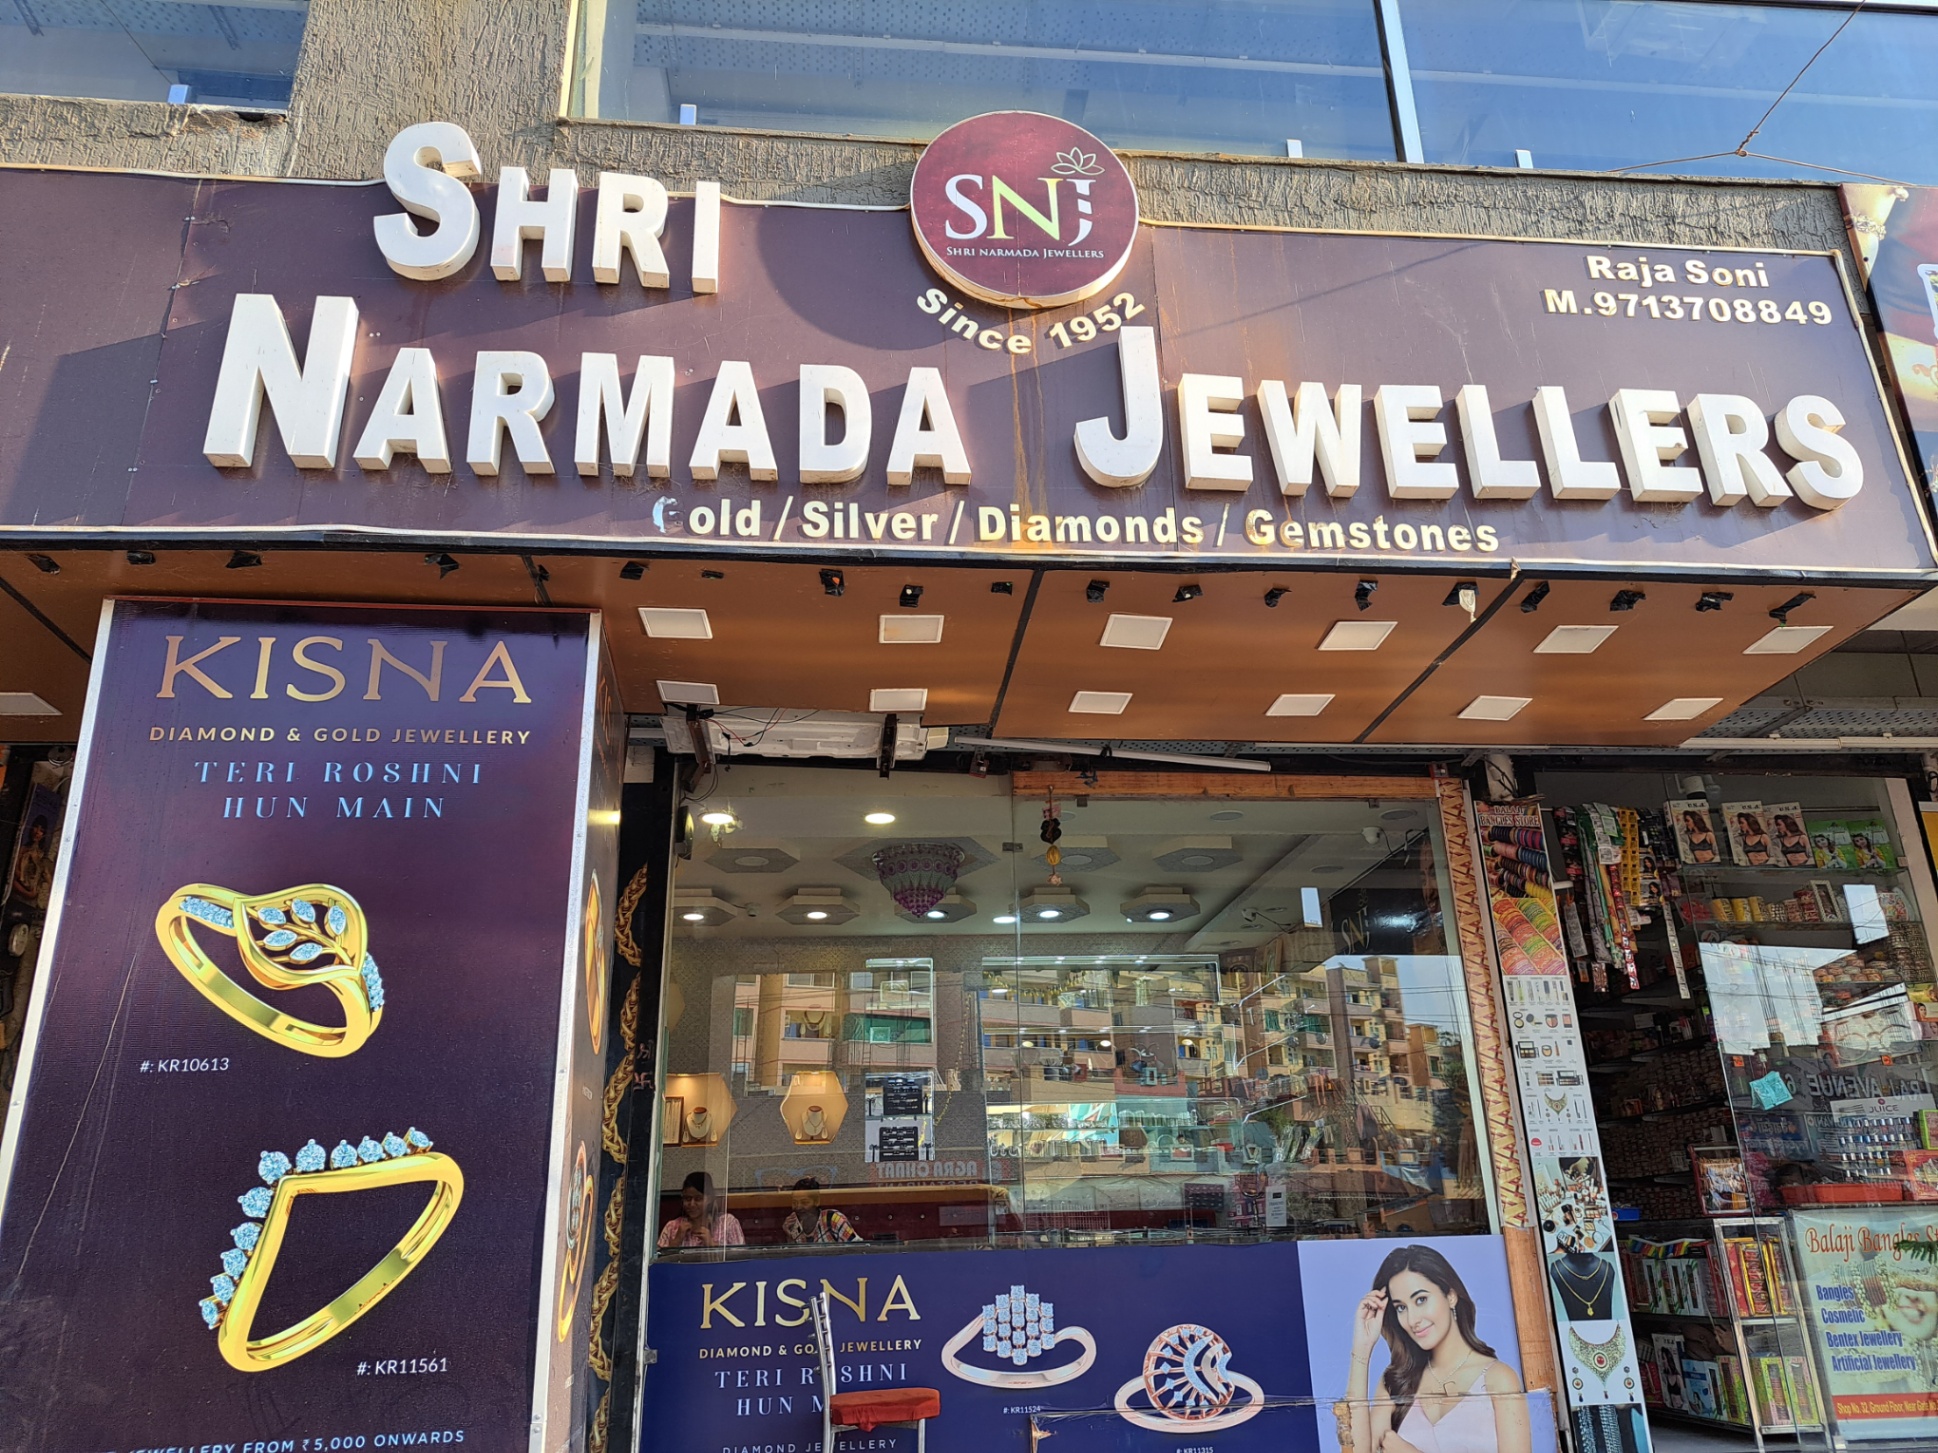 Bracelets, Bridal & Wedding Ring Sets, Earrings, Jewelry Sets, Kamar bandh on sale